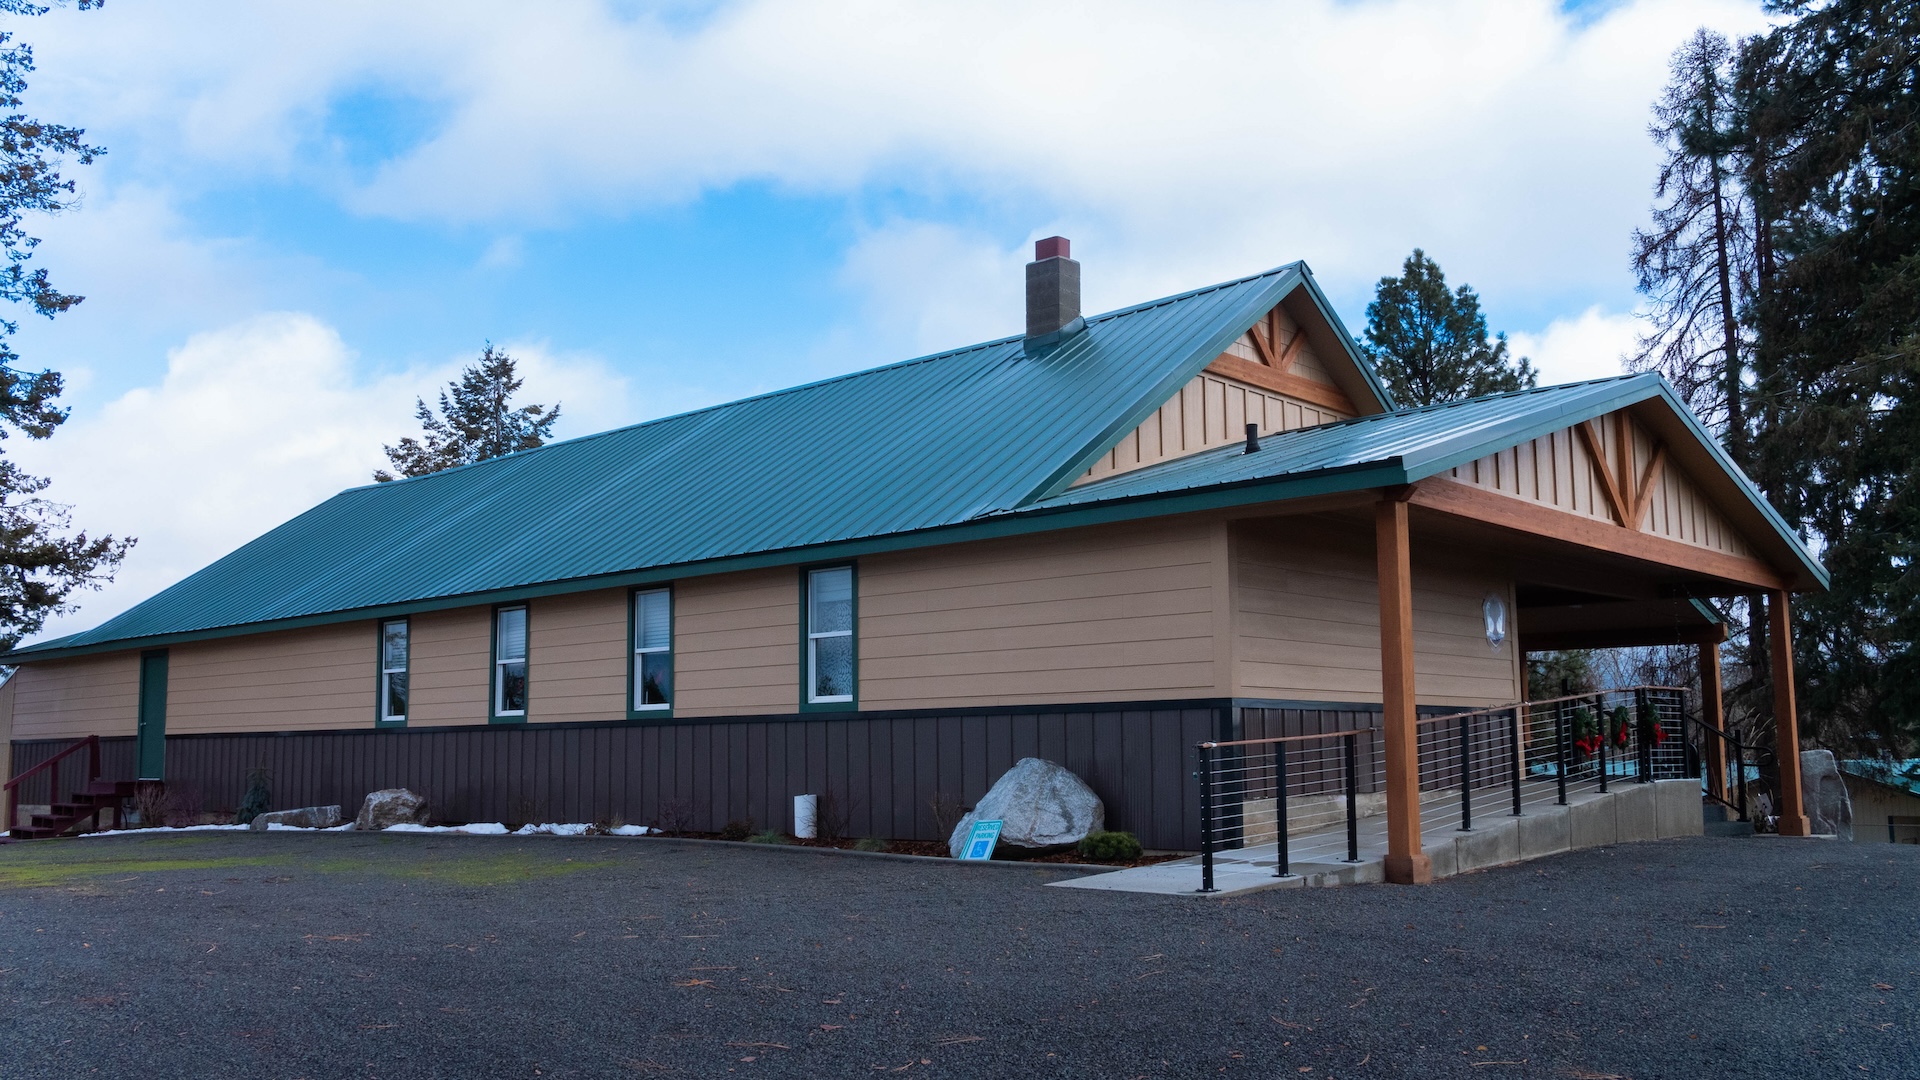 Green Bluff Grange #300 with new metal roof - Colbert, WA